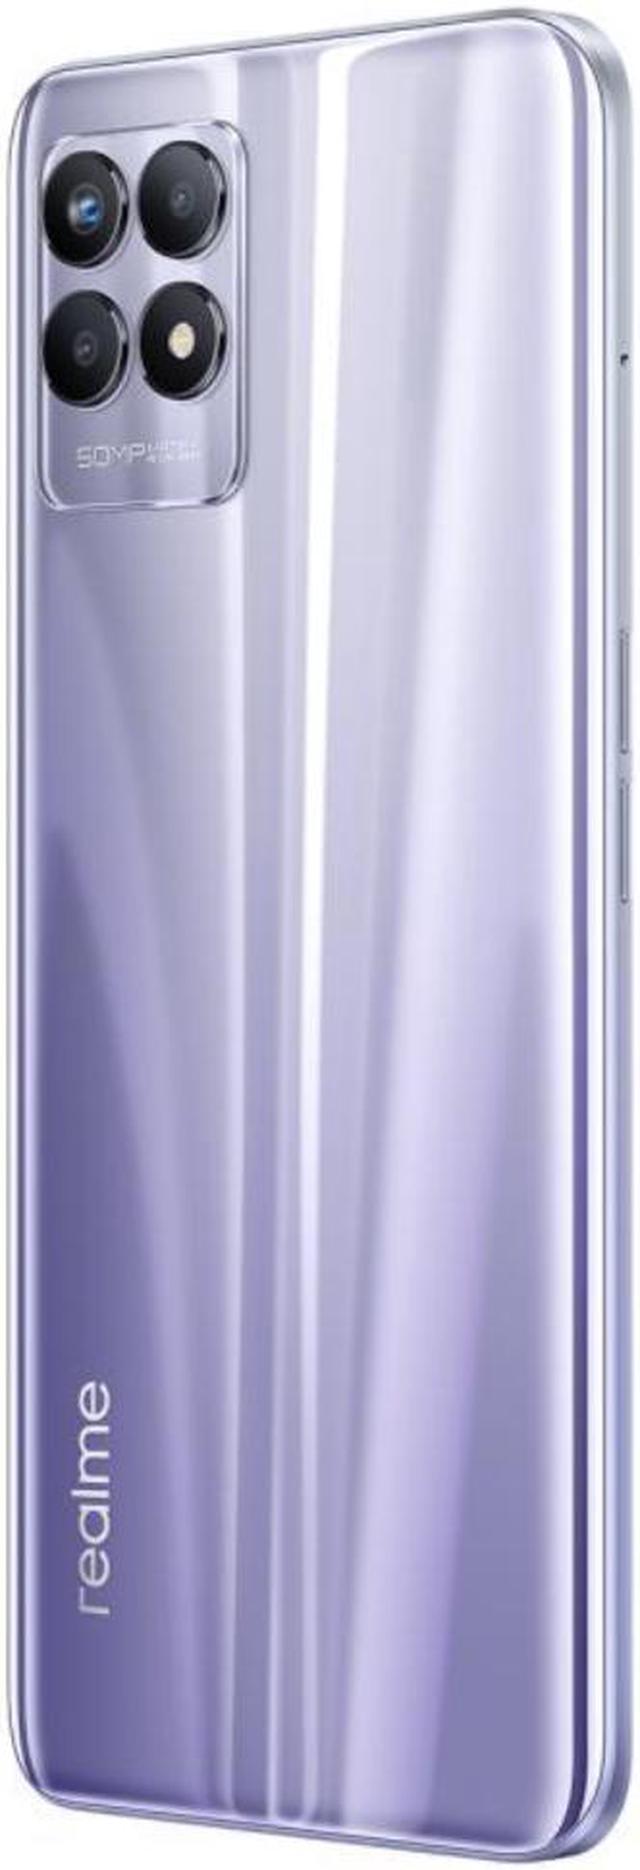 Realme 8i Dual-SIM 128GB ROM + 4GB RAM (GSM only  No CDMA) Factory  Unlocked 4G/LTE SmartPhone (Space Purple) - International Version 